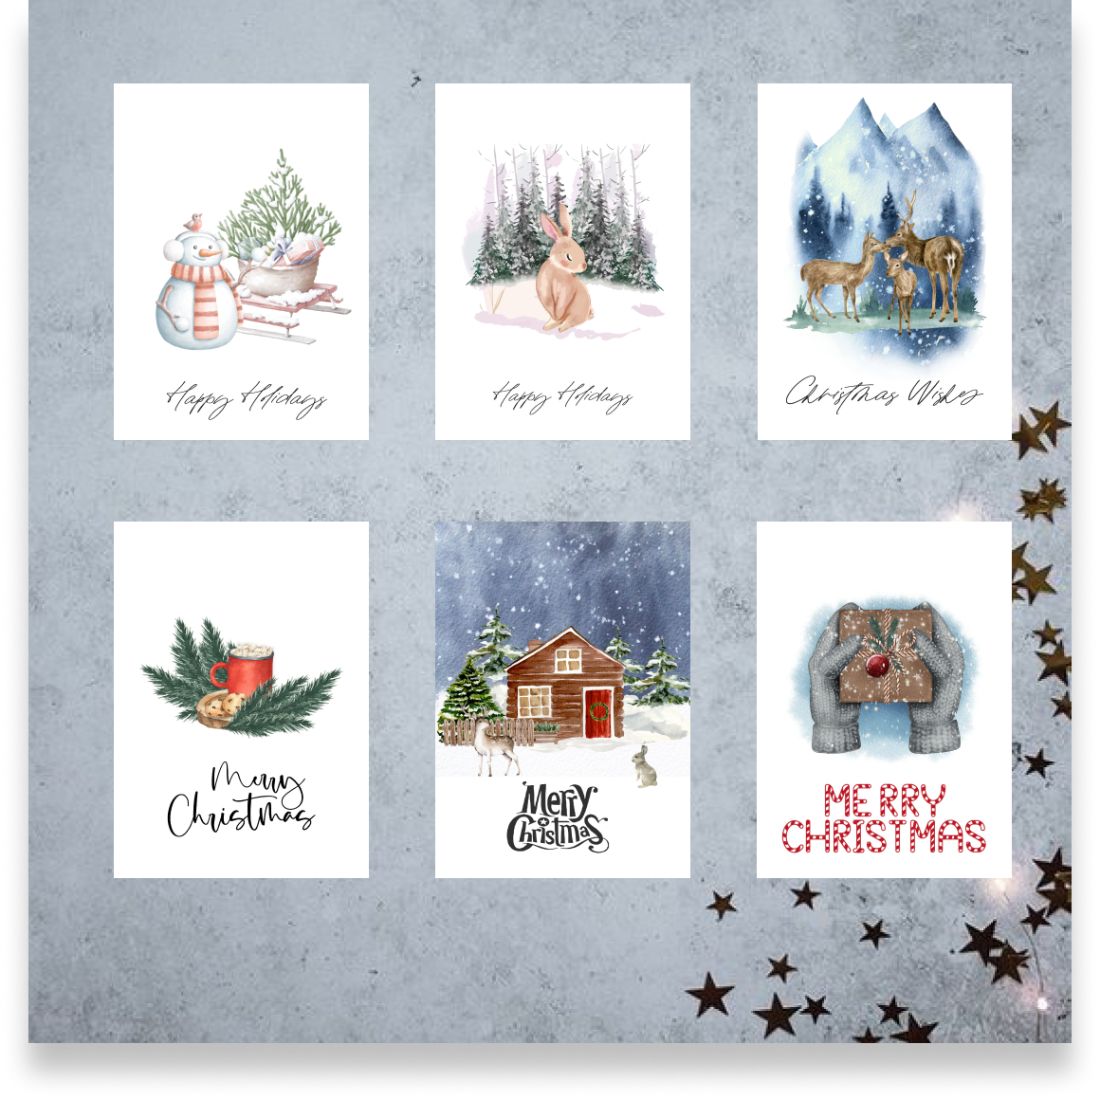 Beautiful Merry Christmasmas Cards Design cover image.